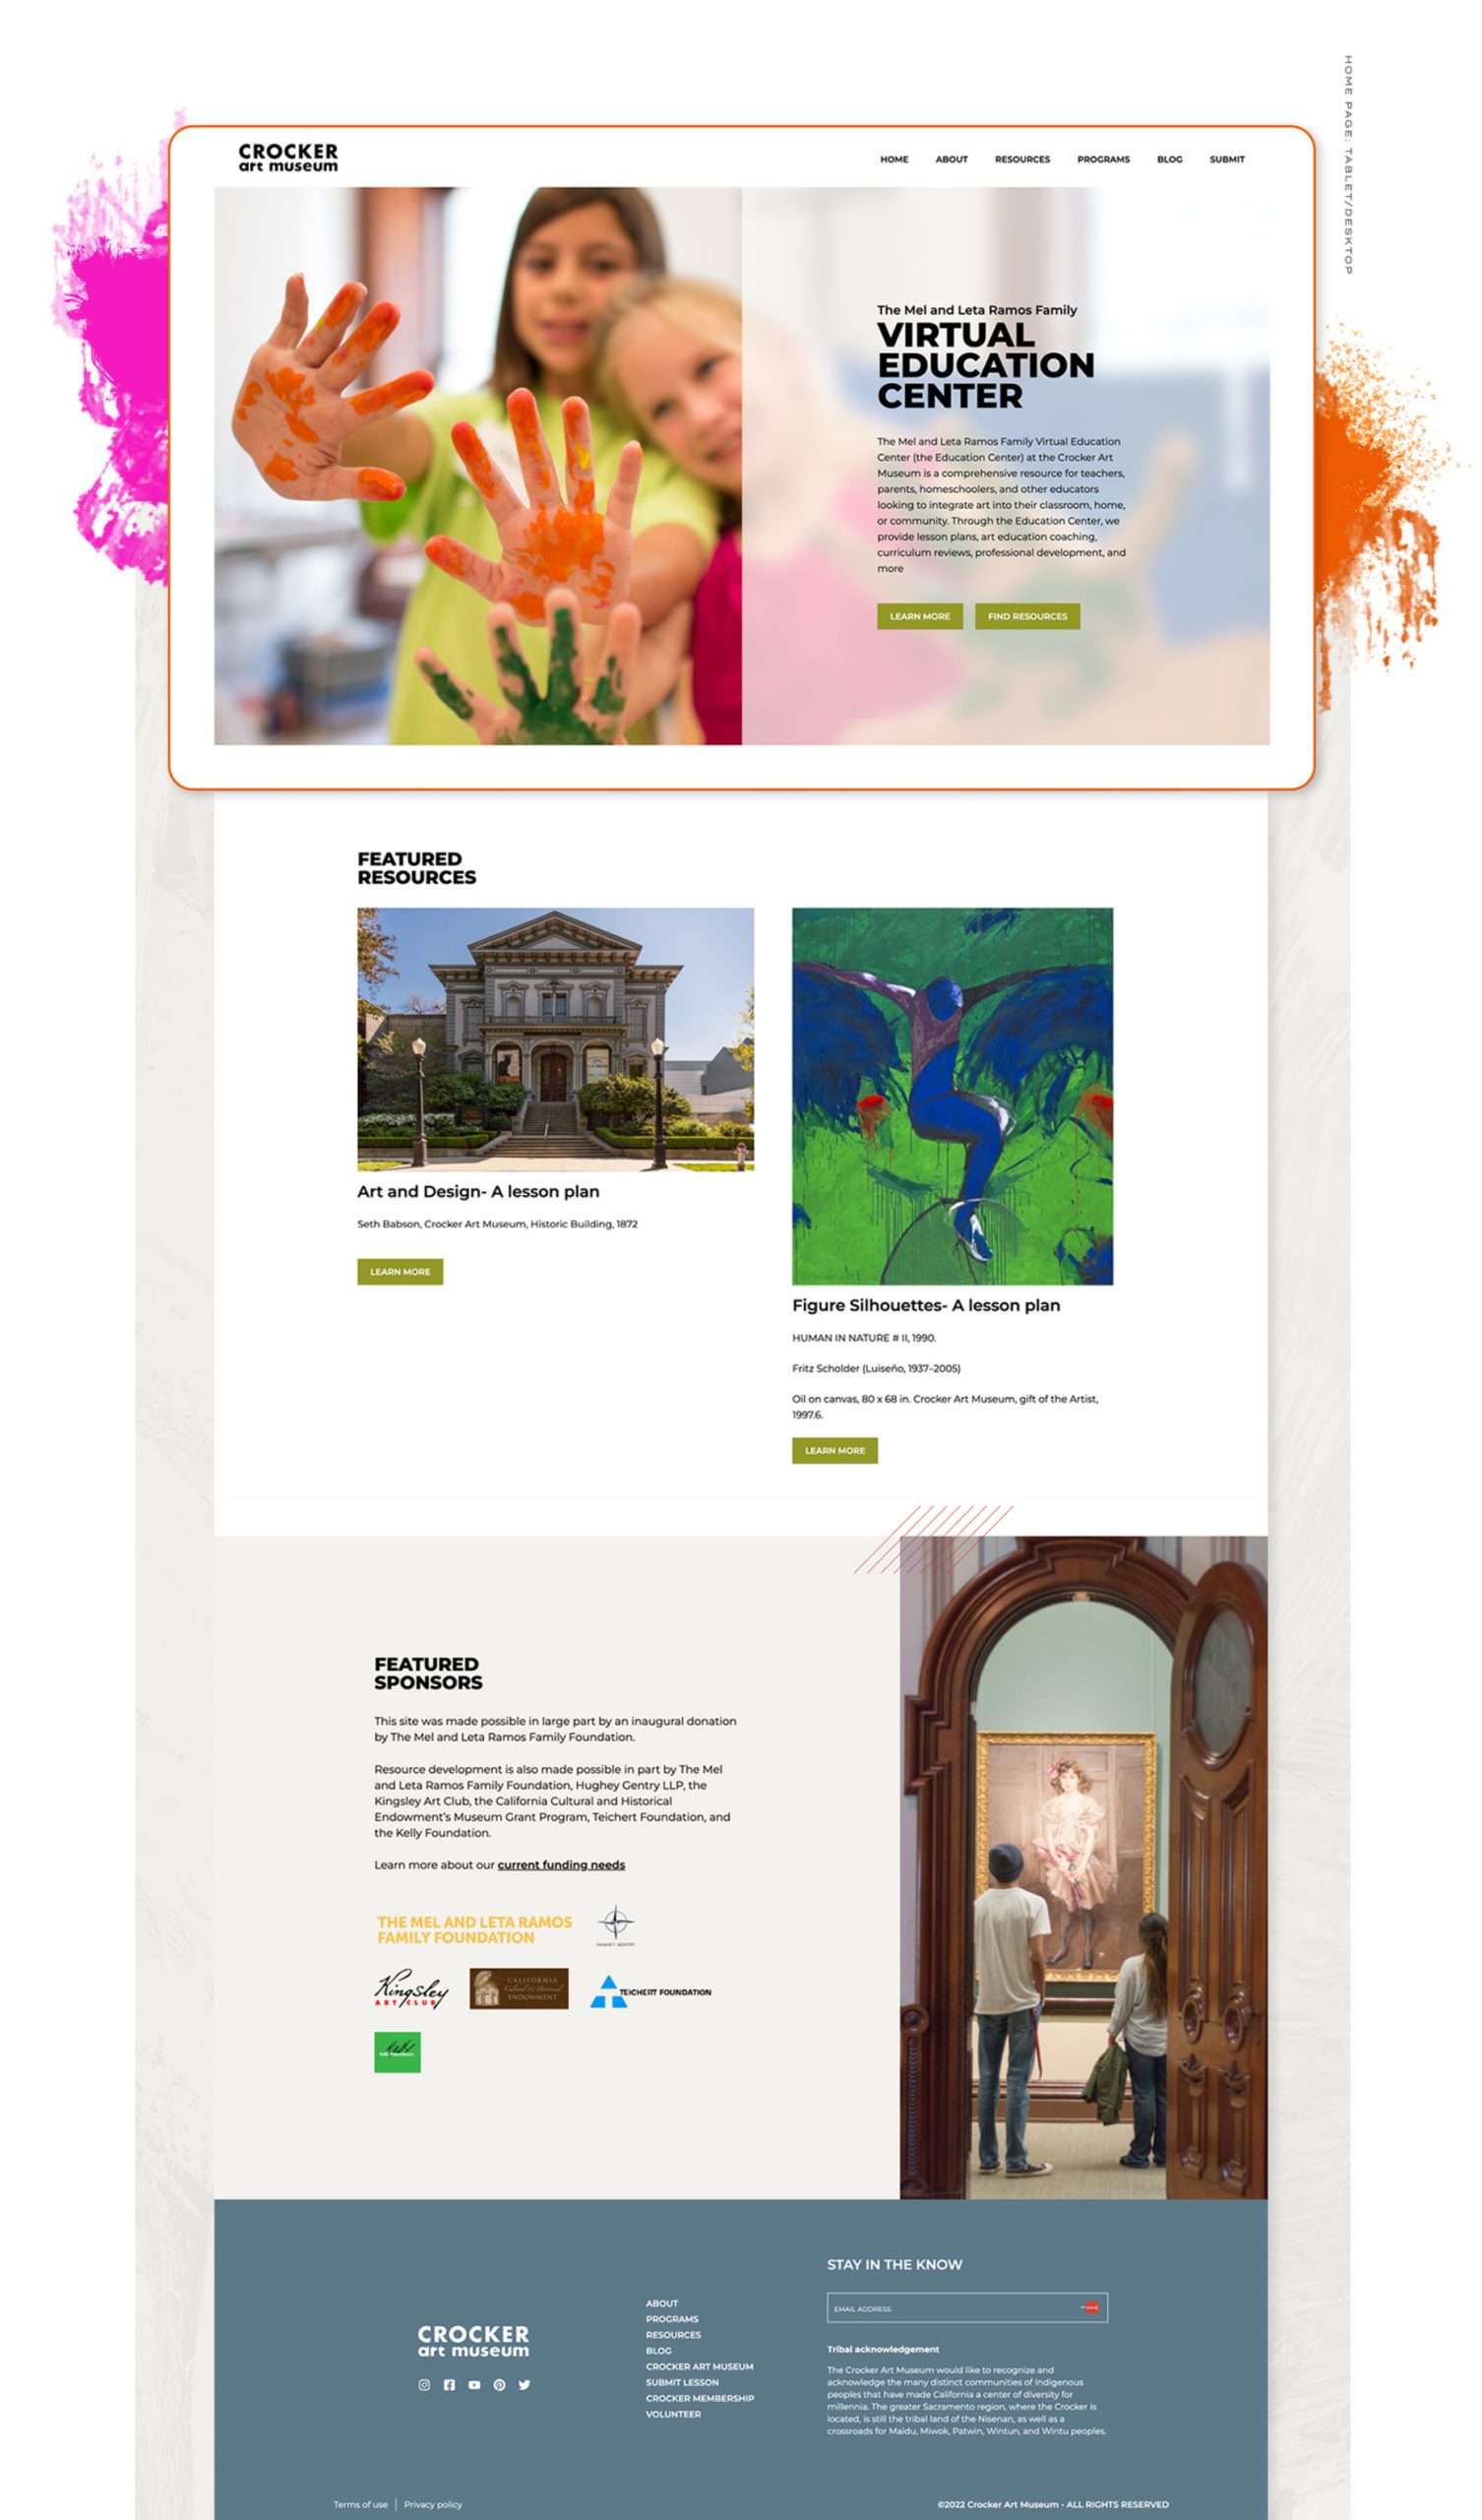 Crocker Art Museum: Virtual Education Center web design and web development home page layout